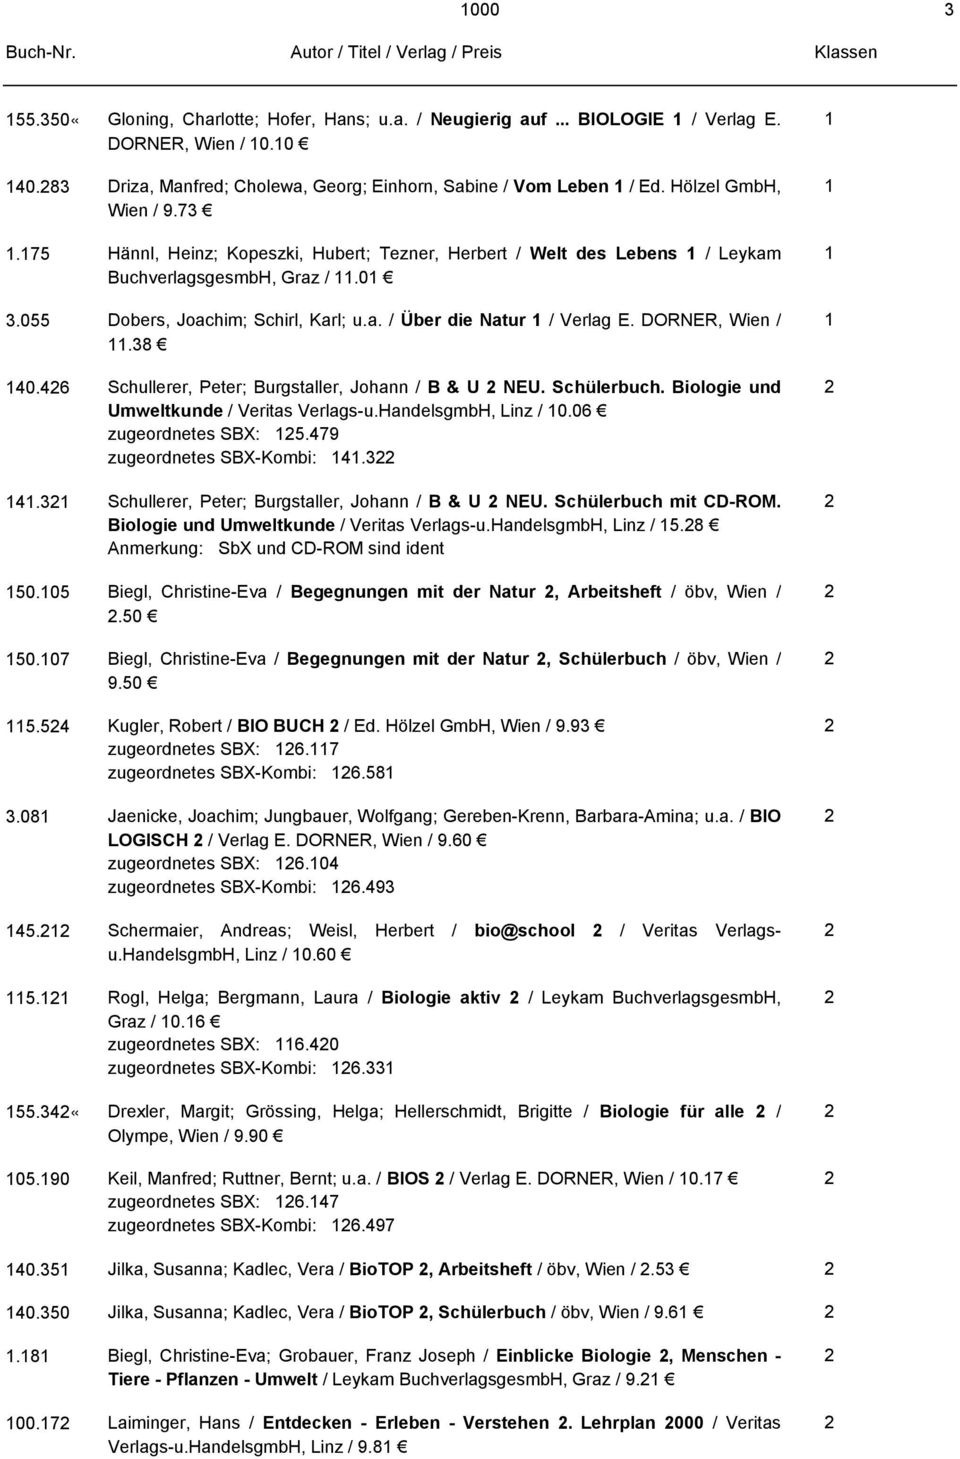 Schullerer, Peter; Burgstaller, Johann / B & U NEU. Schülerbuch. Biologie und Umweltkunde / Veritas Verlags-u.HandelsgmbH, Linz / 0.0 zugeordnetes SBX:.9 zugeordnetes SBX-Kombi:.